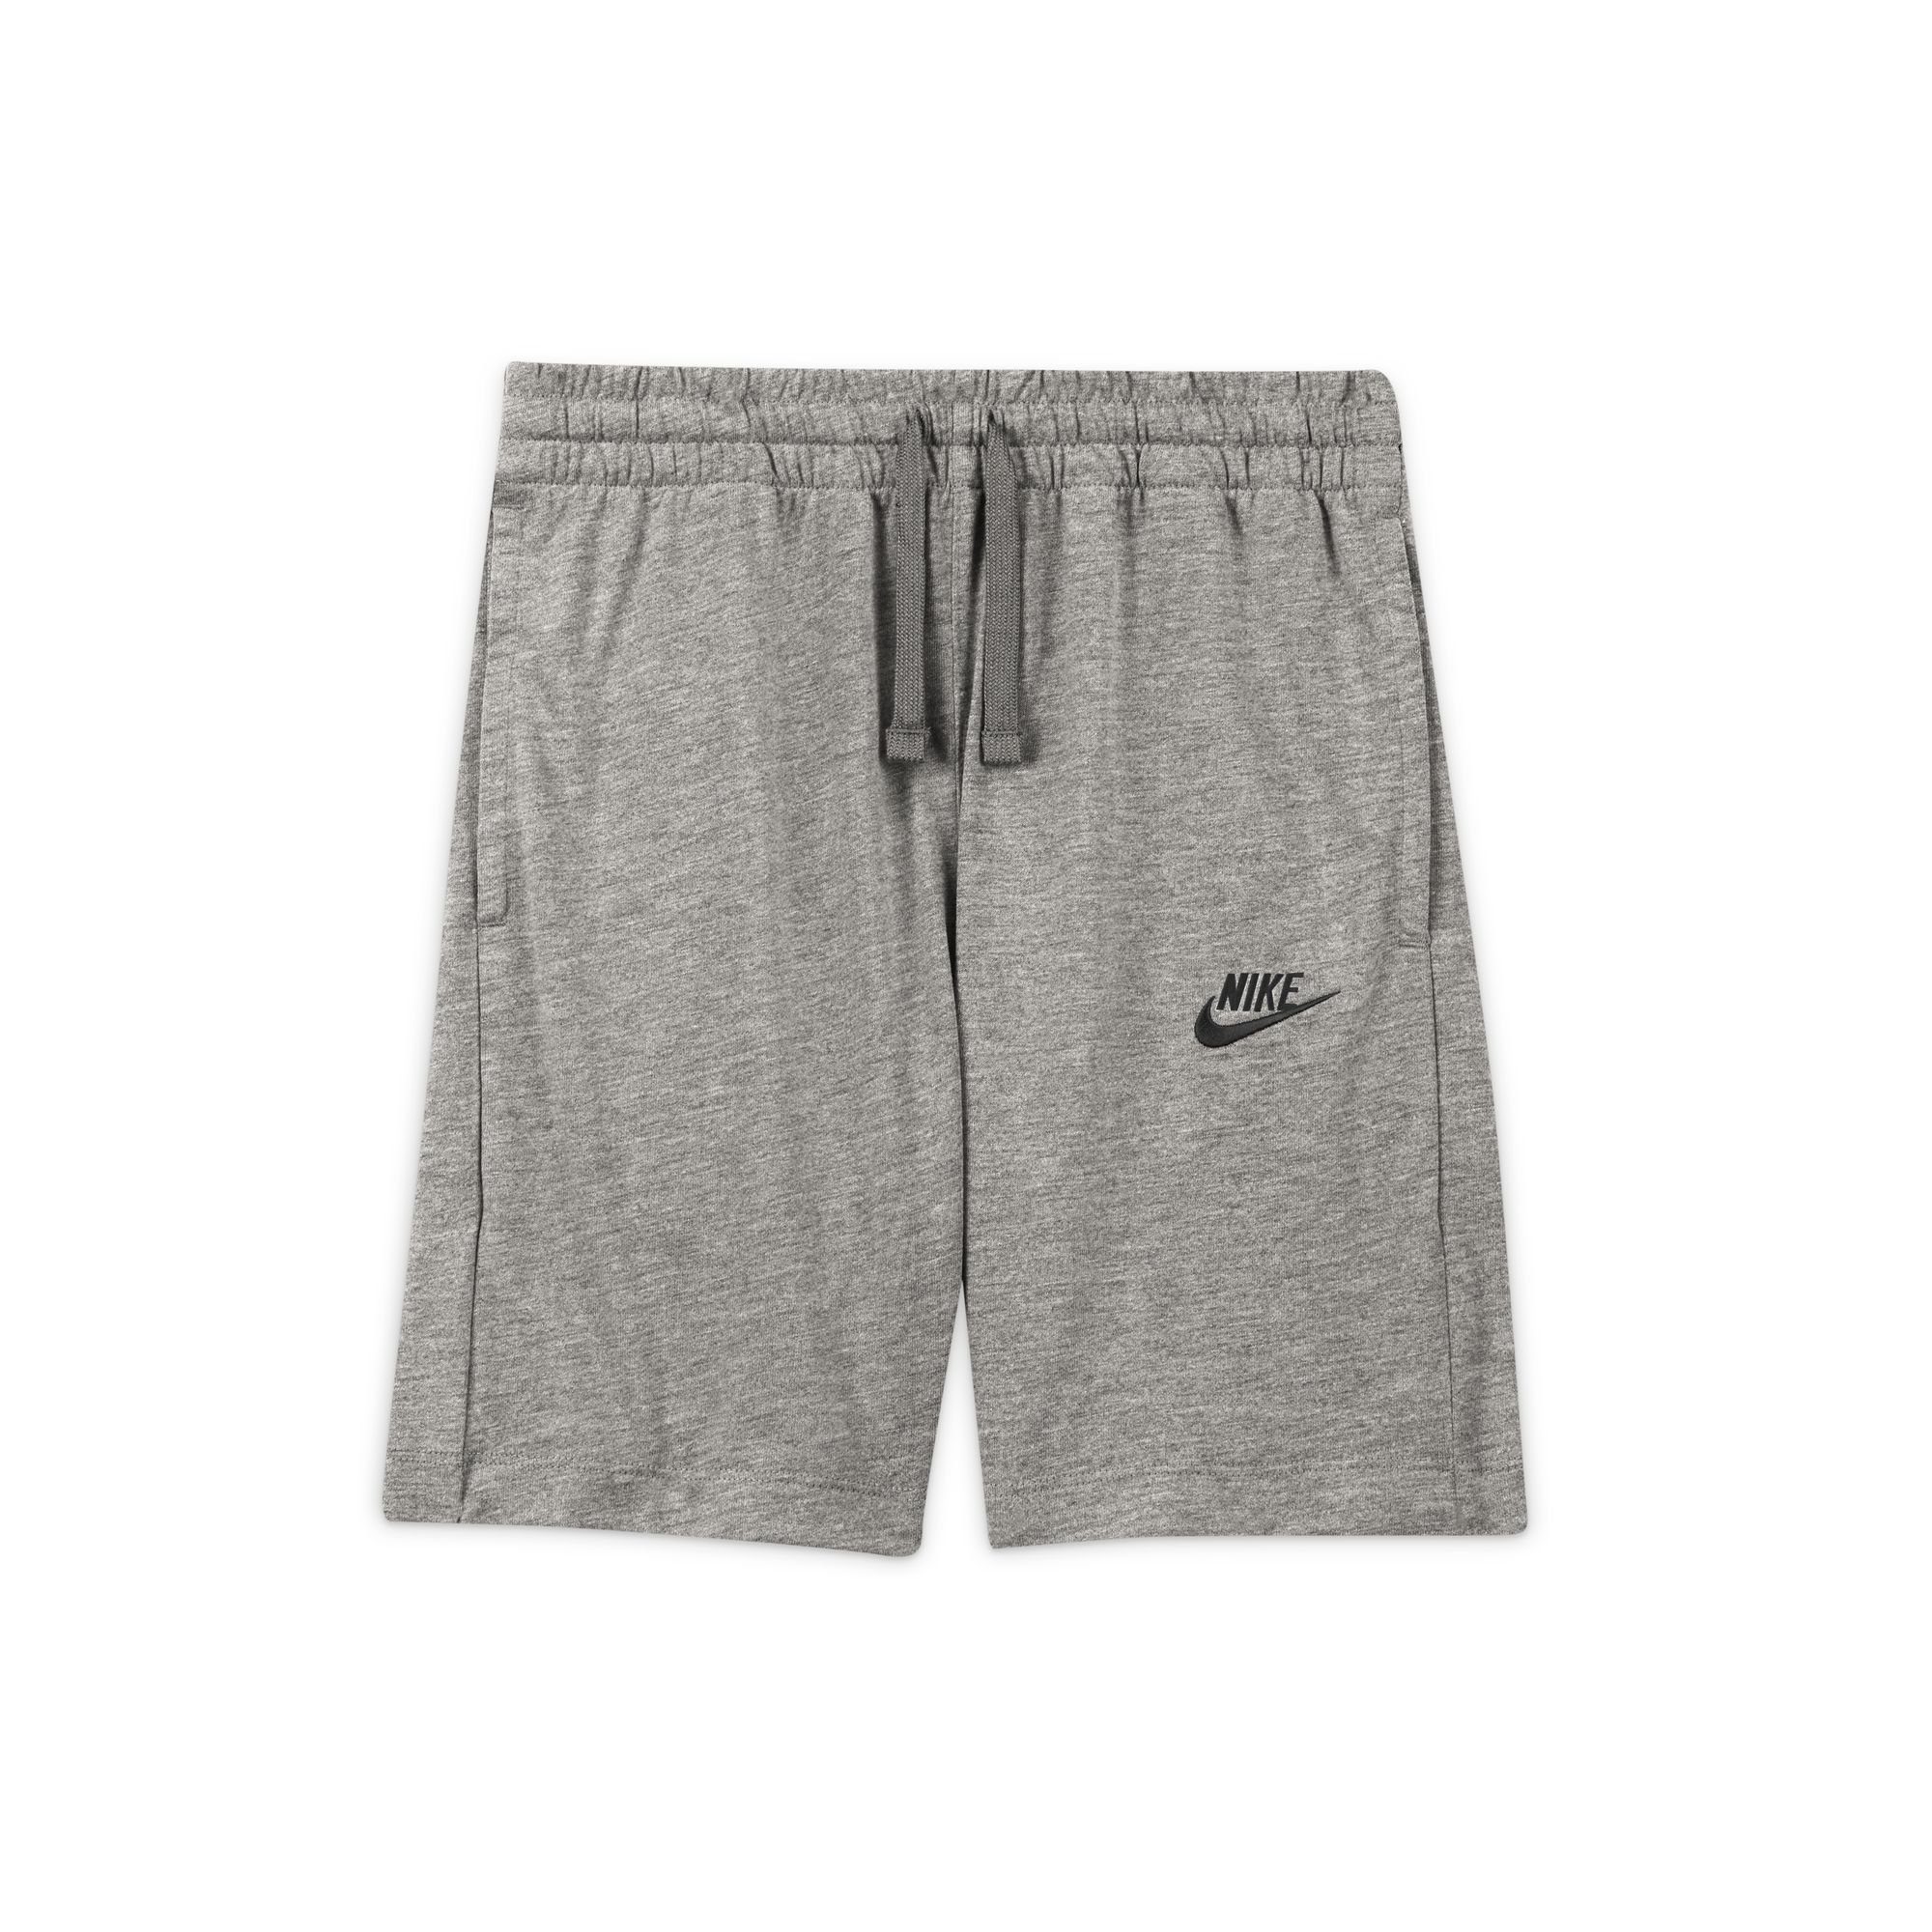 Nike Sportswear (BOYS) SHORTS Shorts BIG KIDS' grau JERSEY